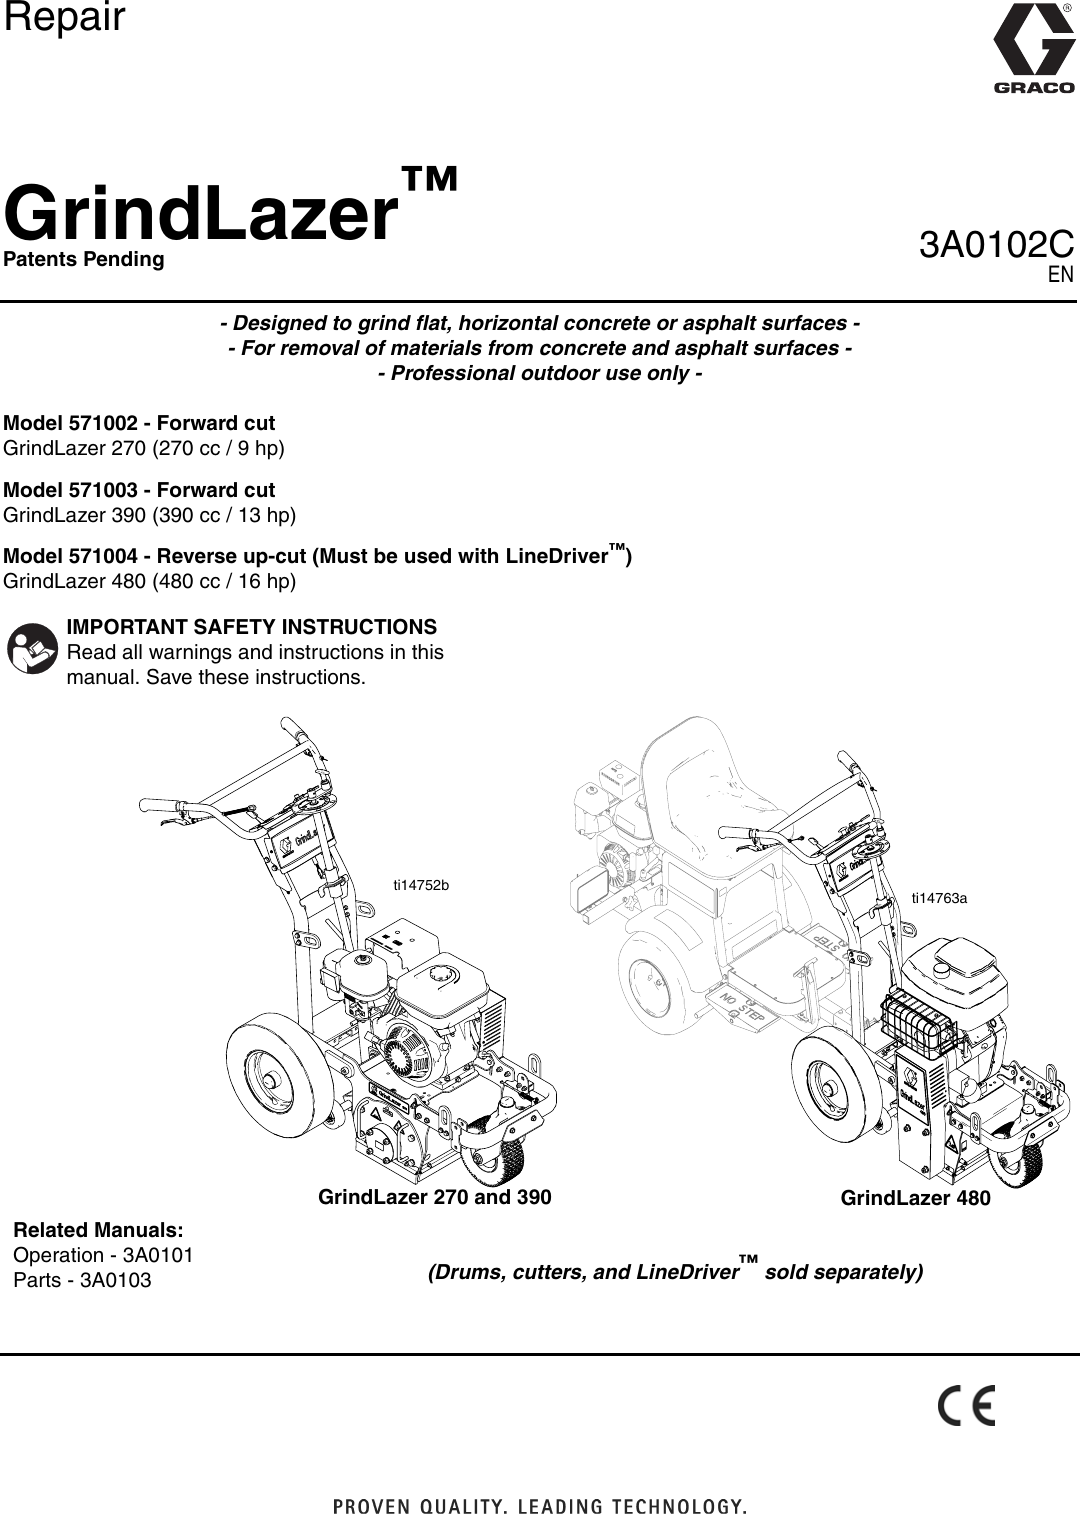 graco-3a0102c-grindlazer-repair-users-manual-english